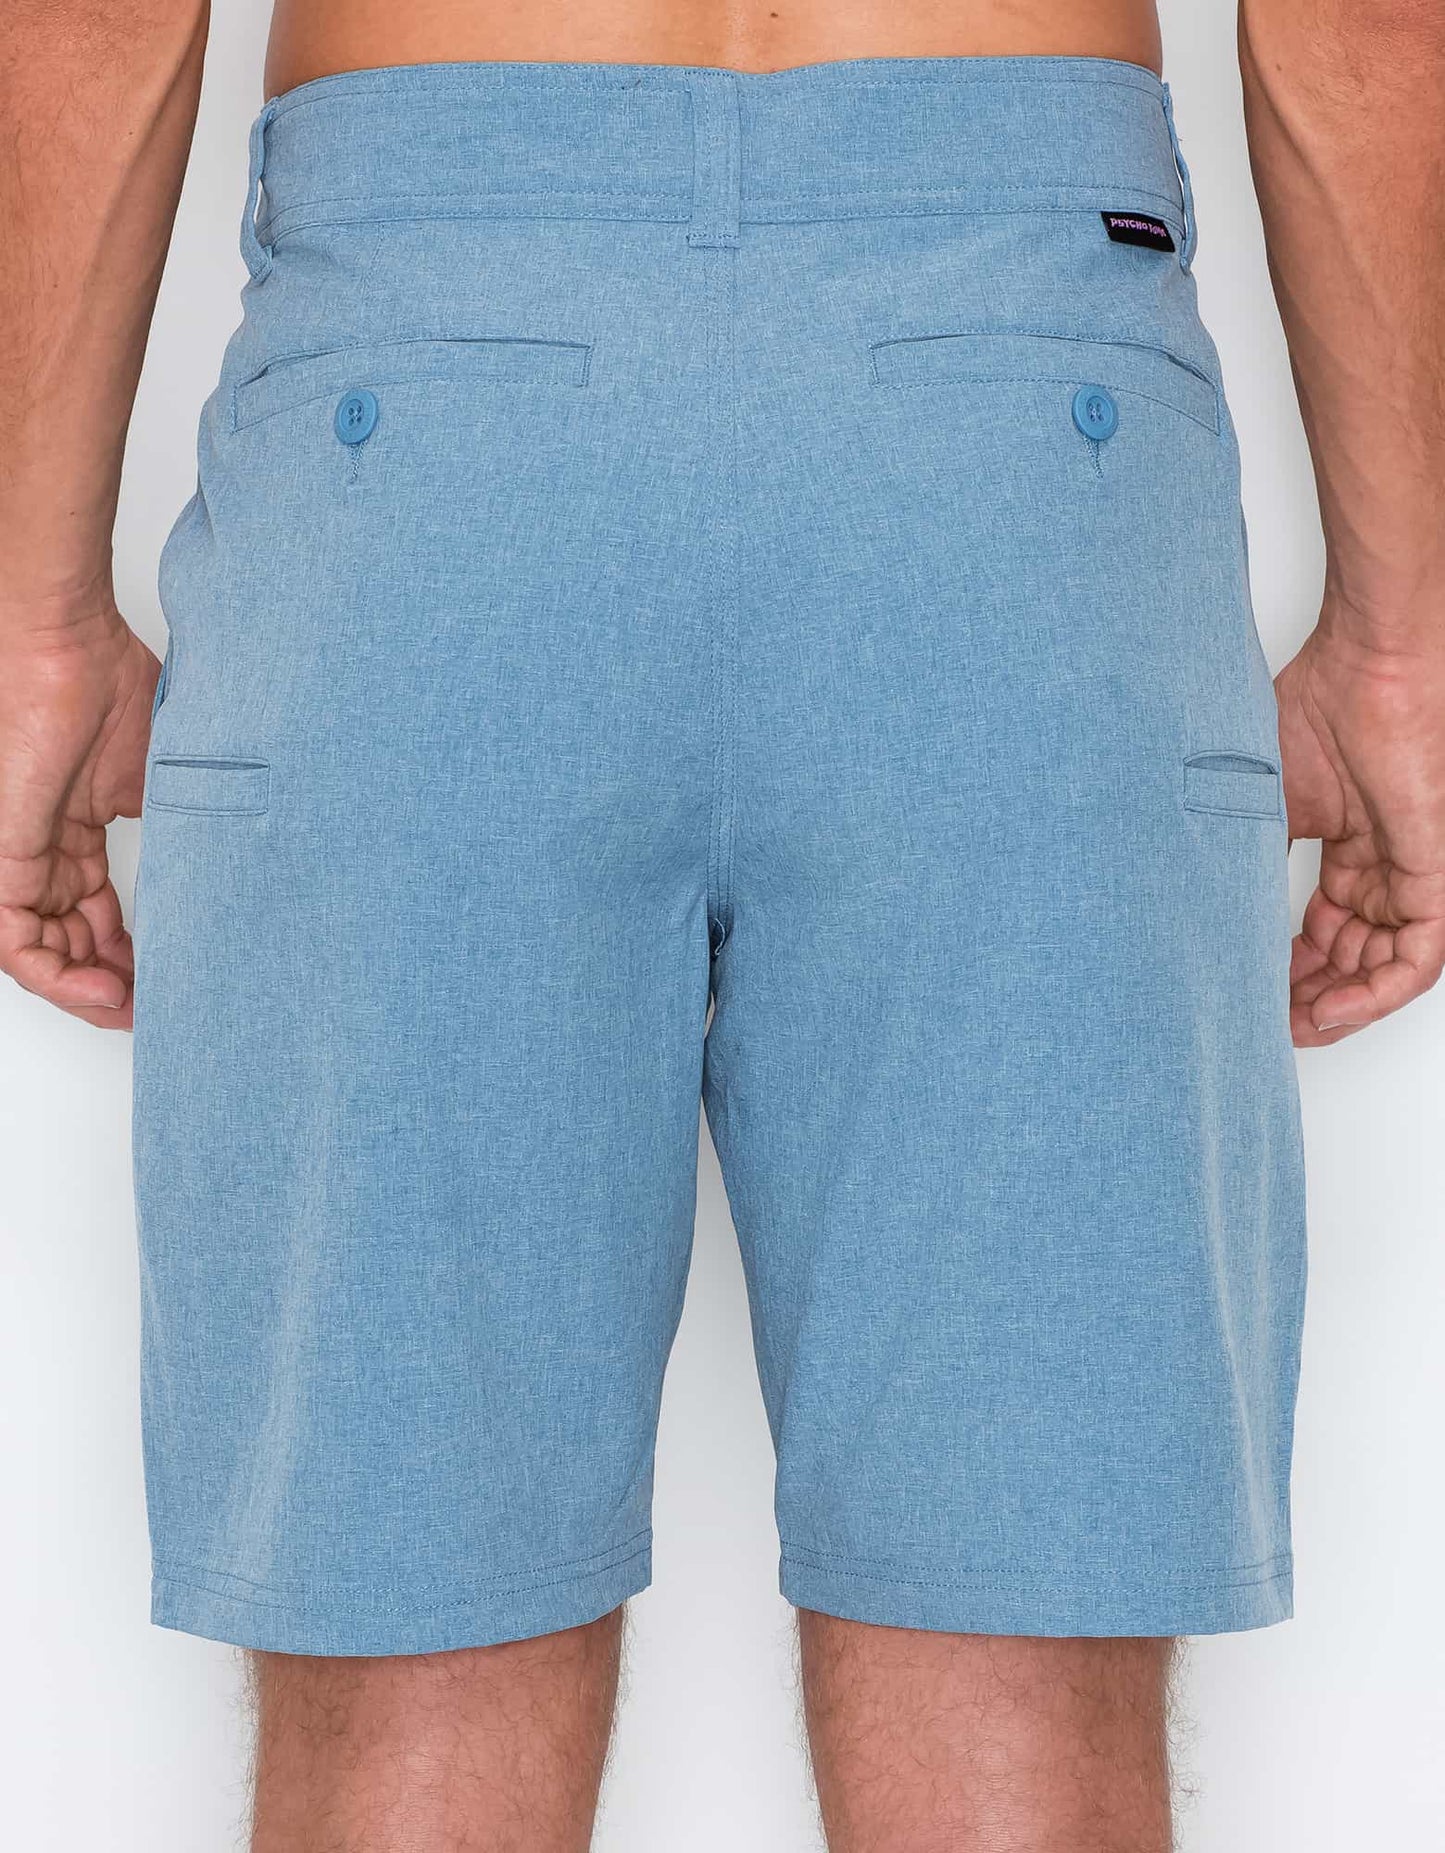 Deckhand Hybrid Shorts